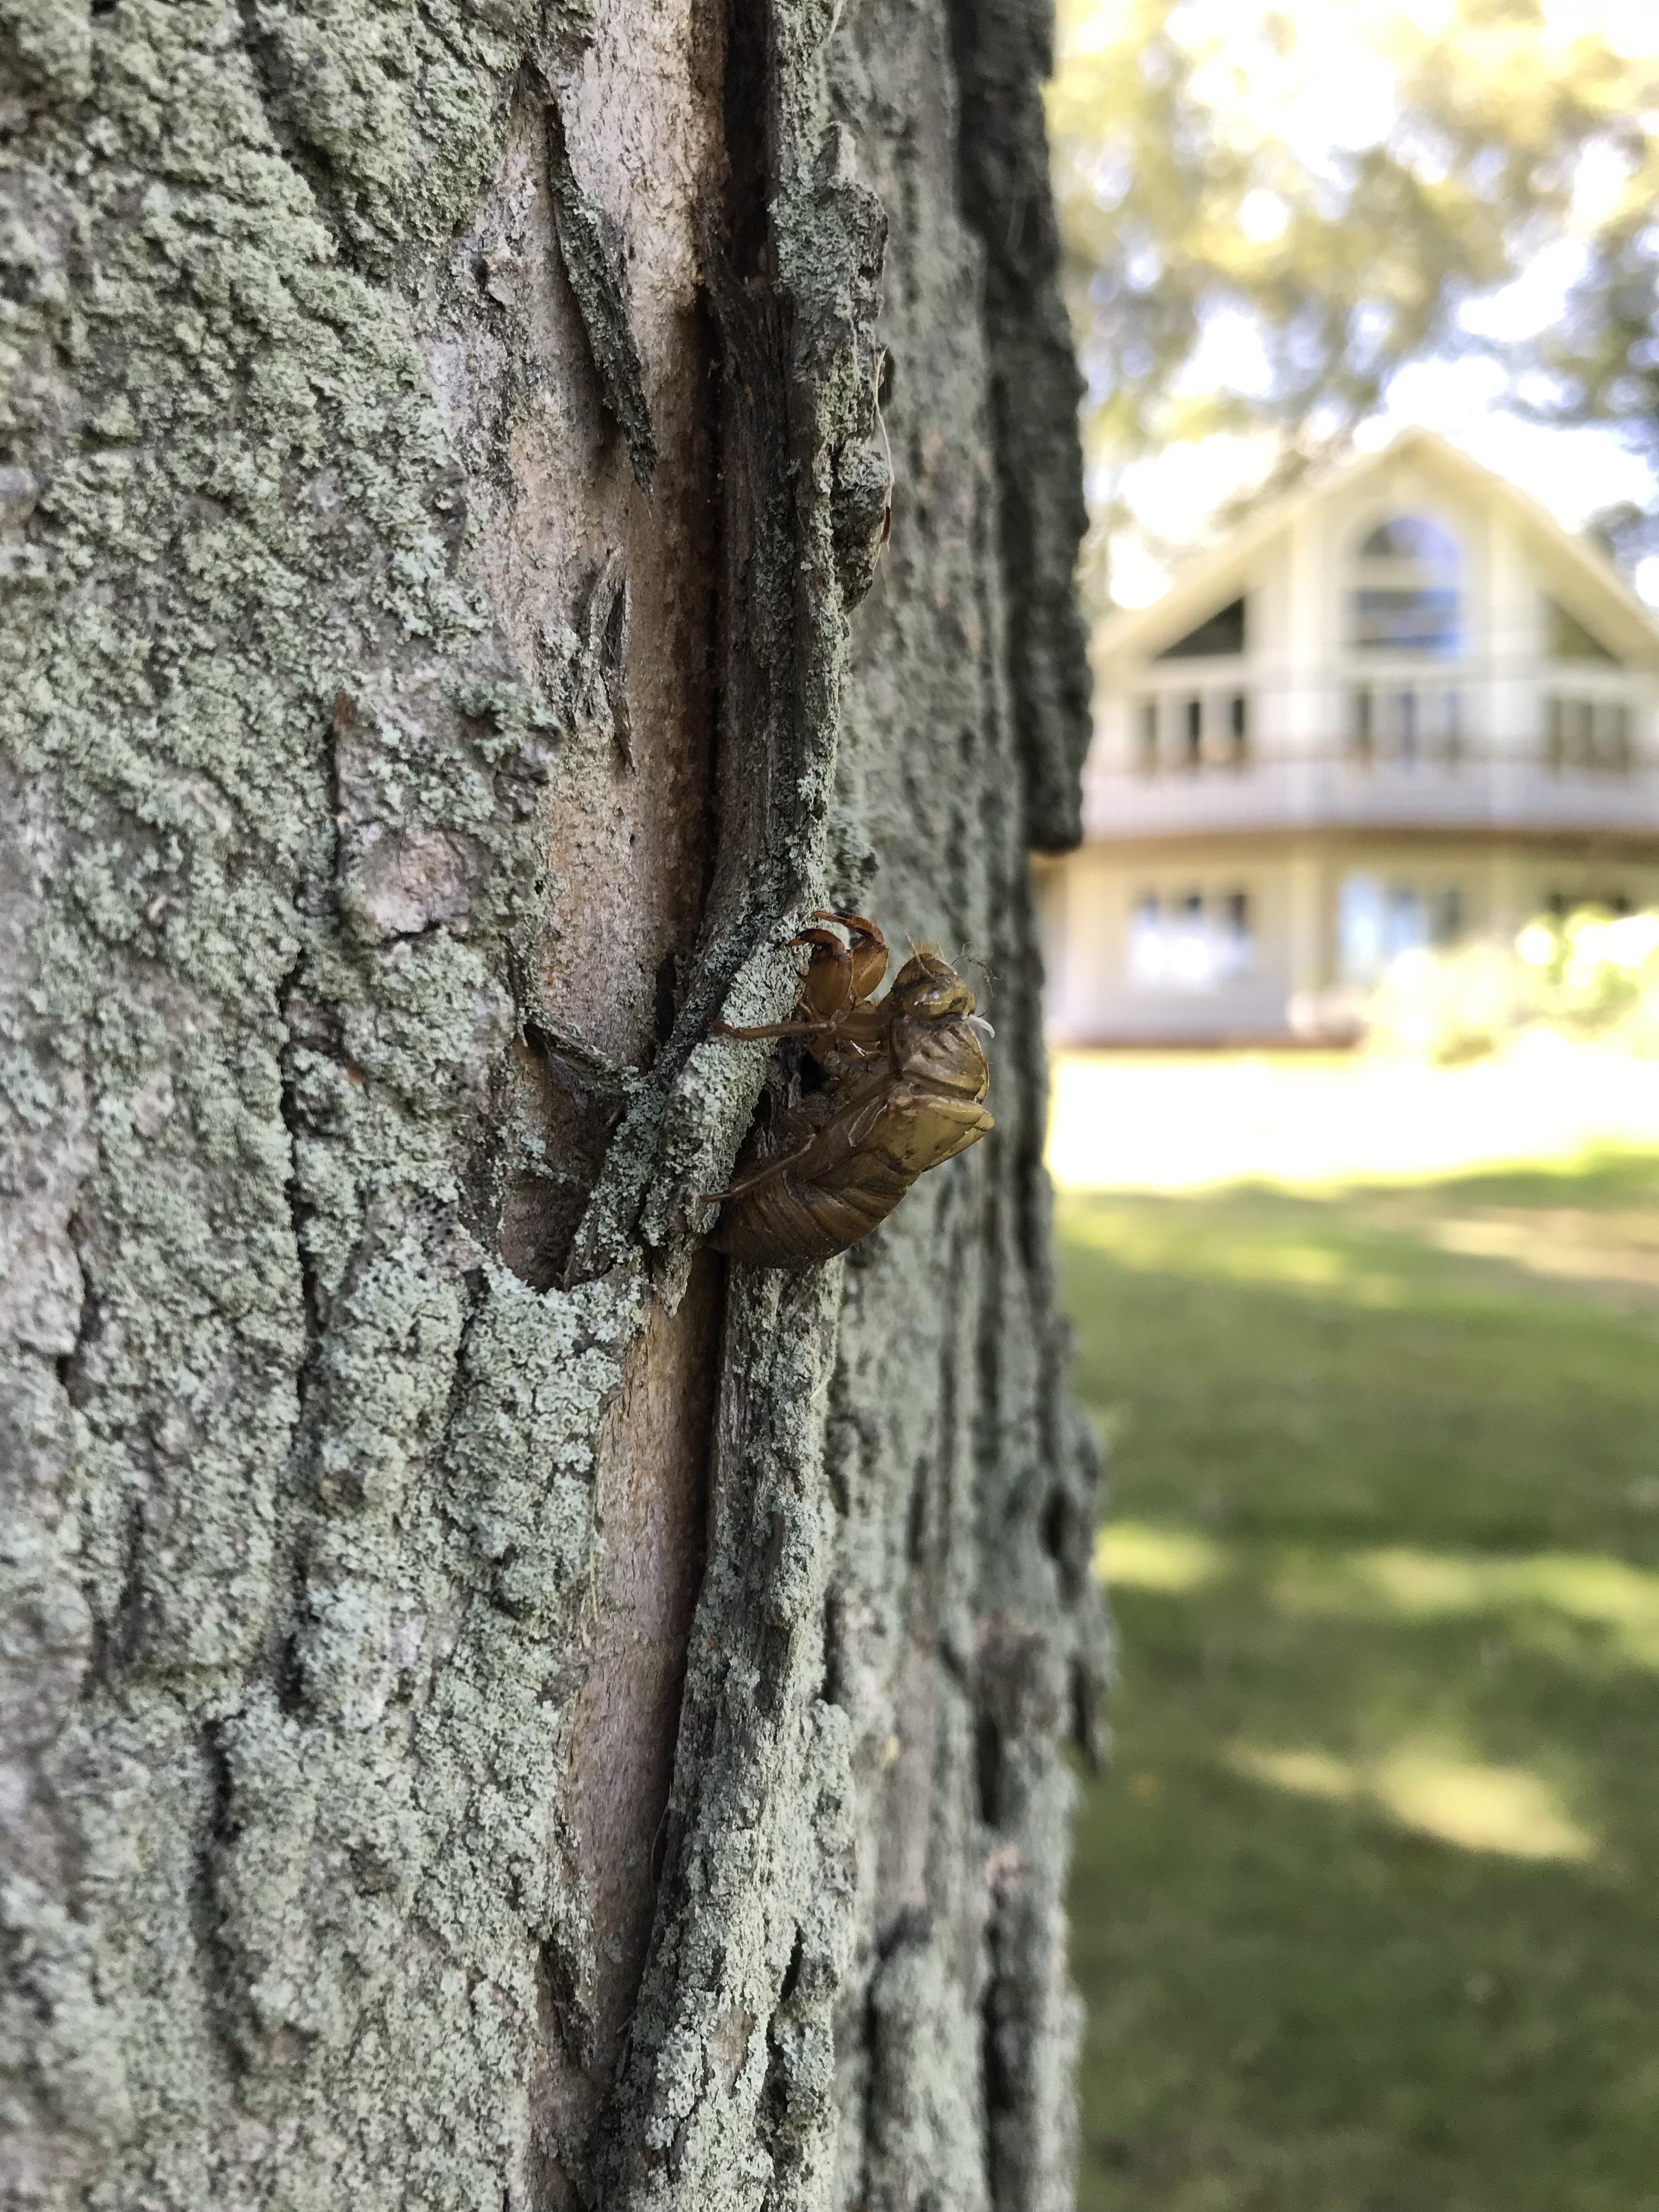 Cicada nymph